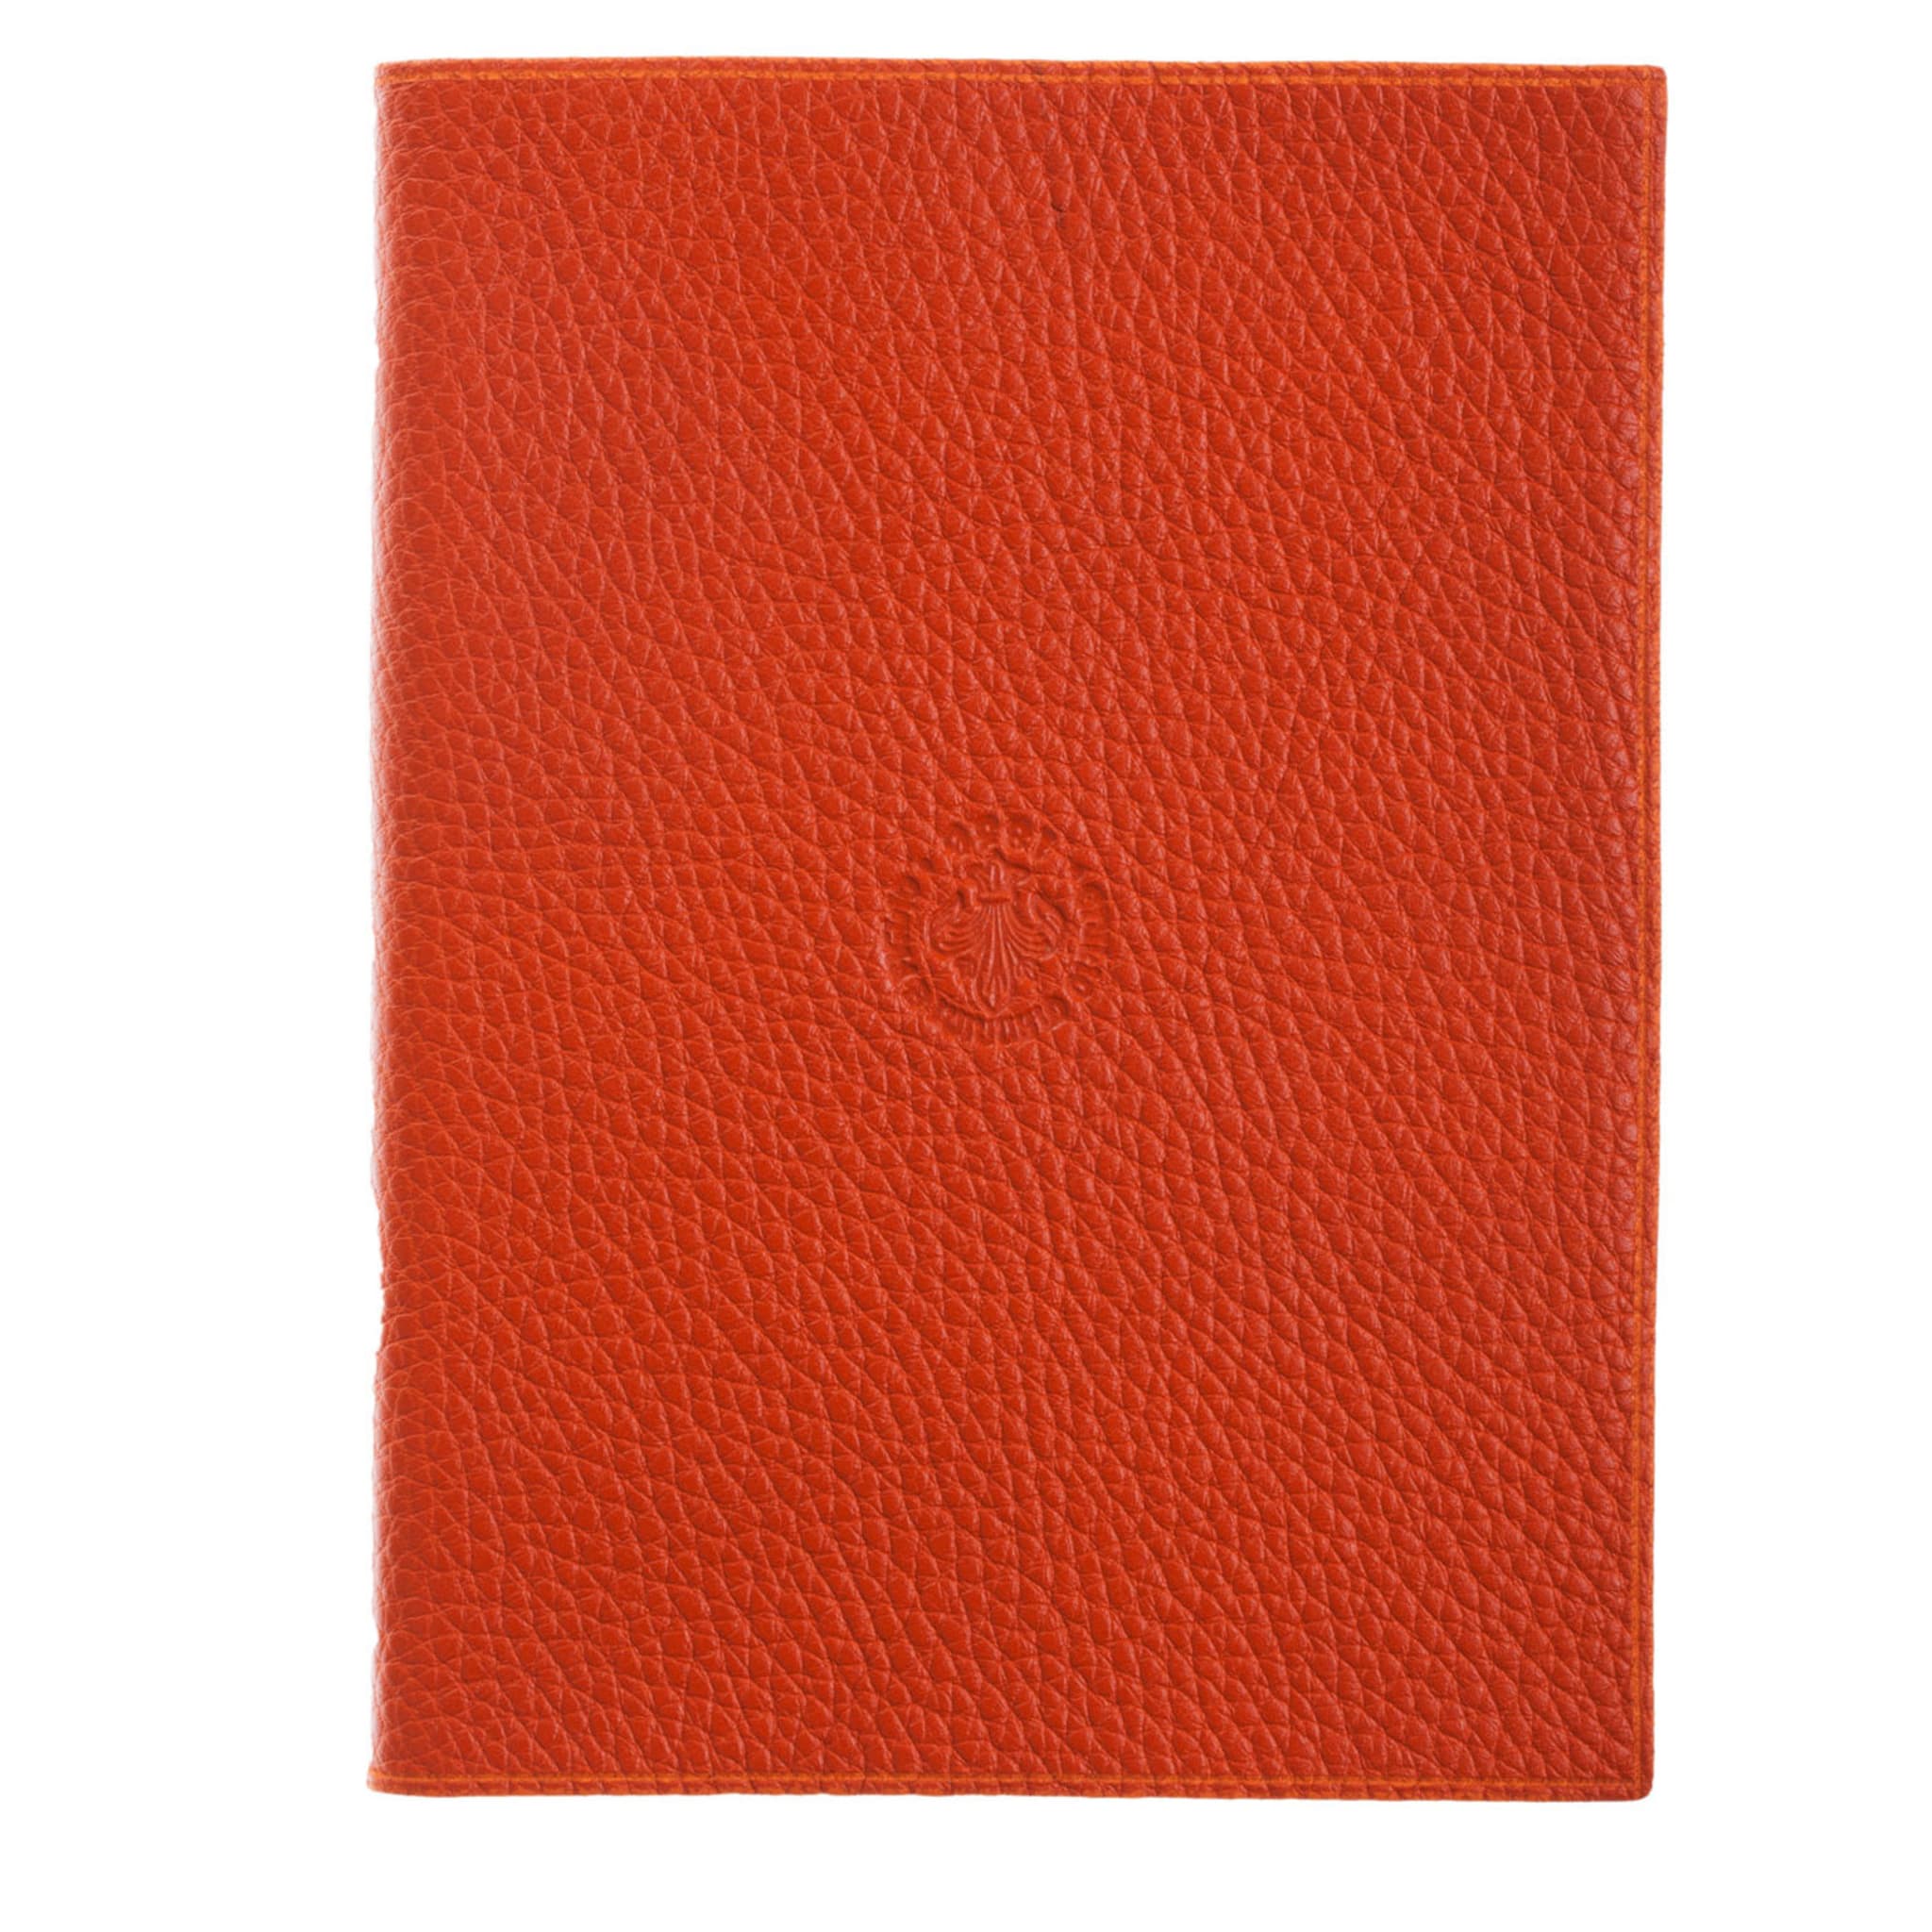 Arancia Leather Notebook - Alternative view 3